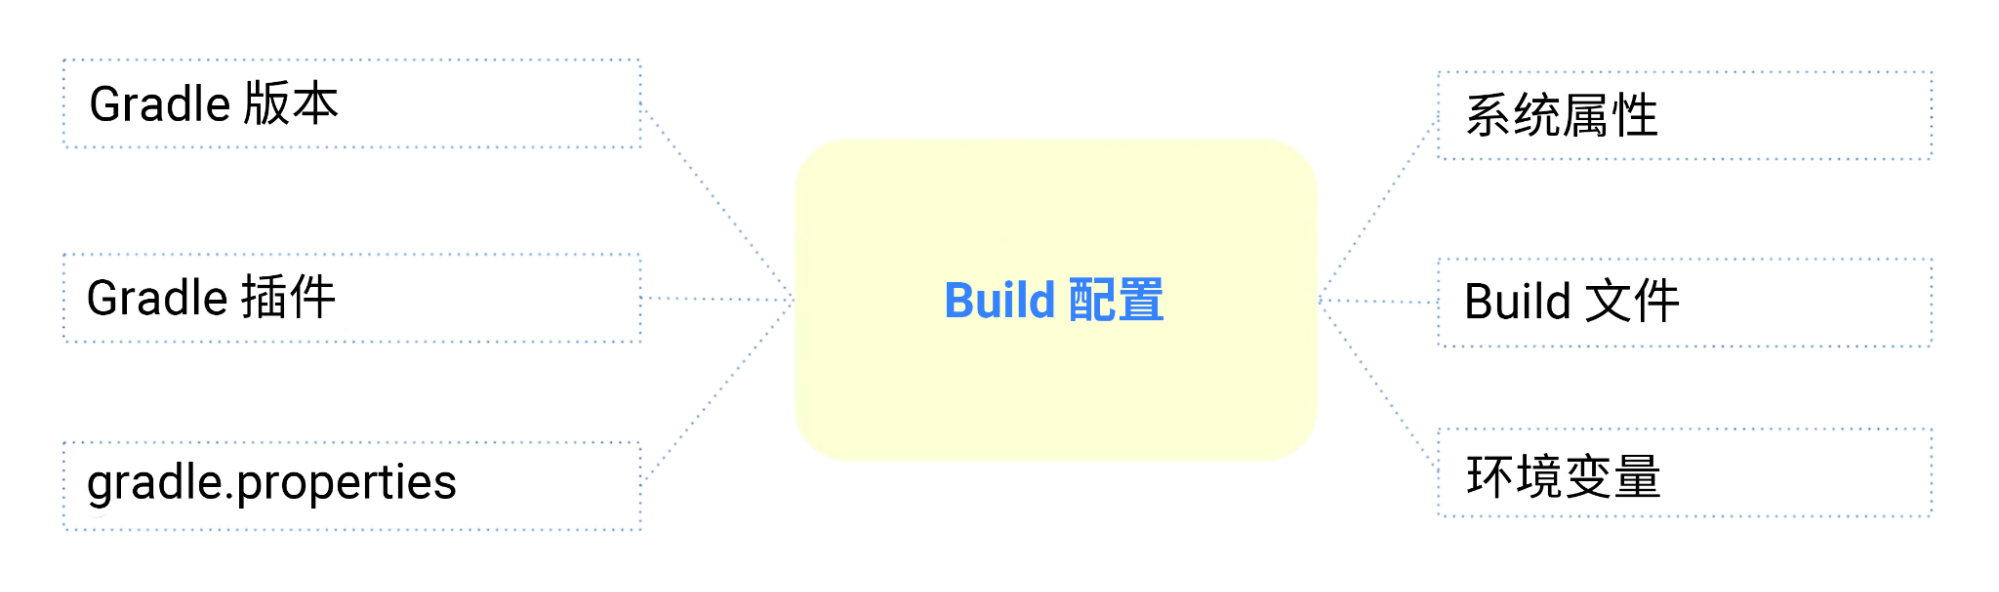 △ Build 配置的输入内容